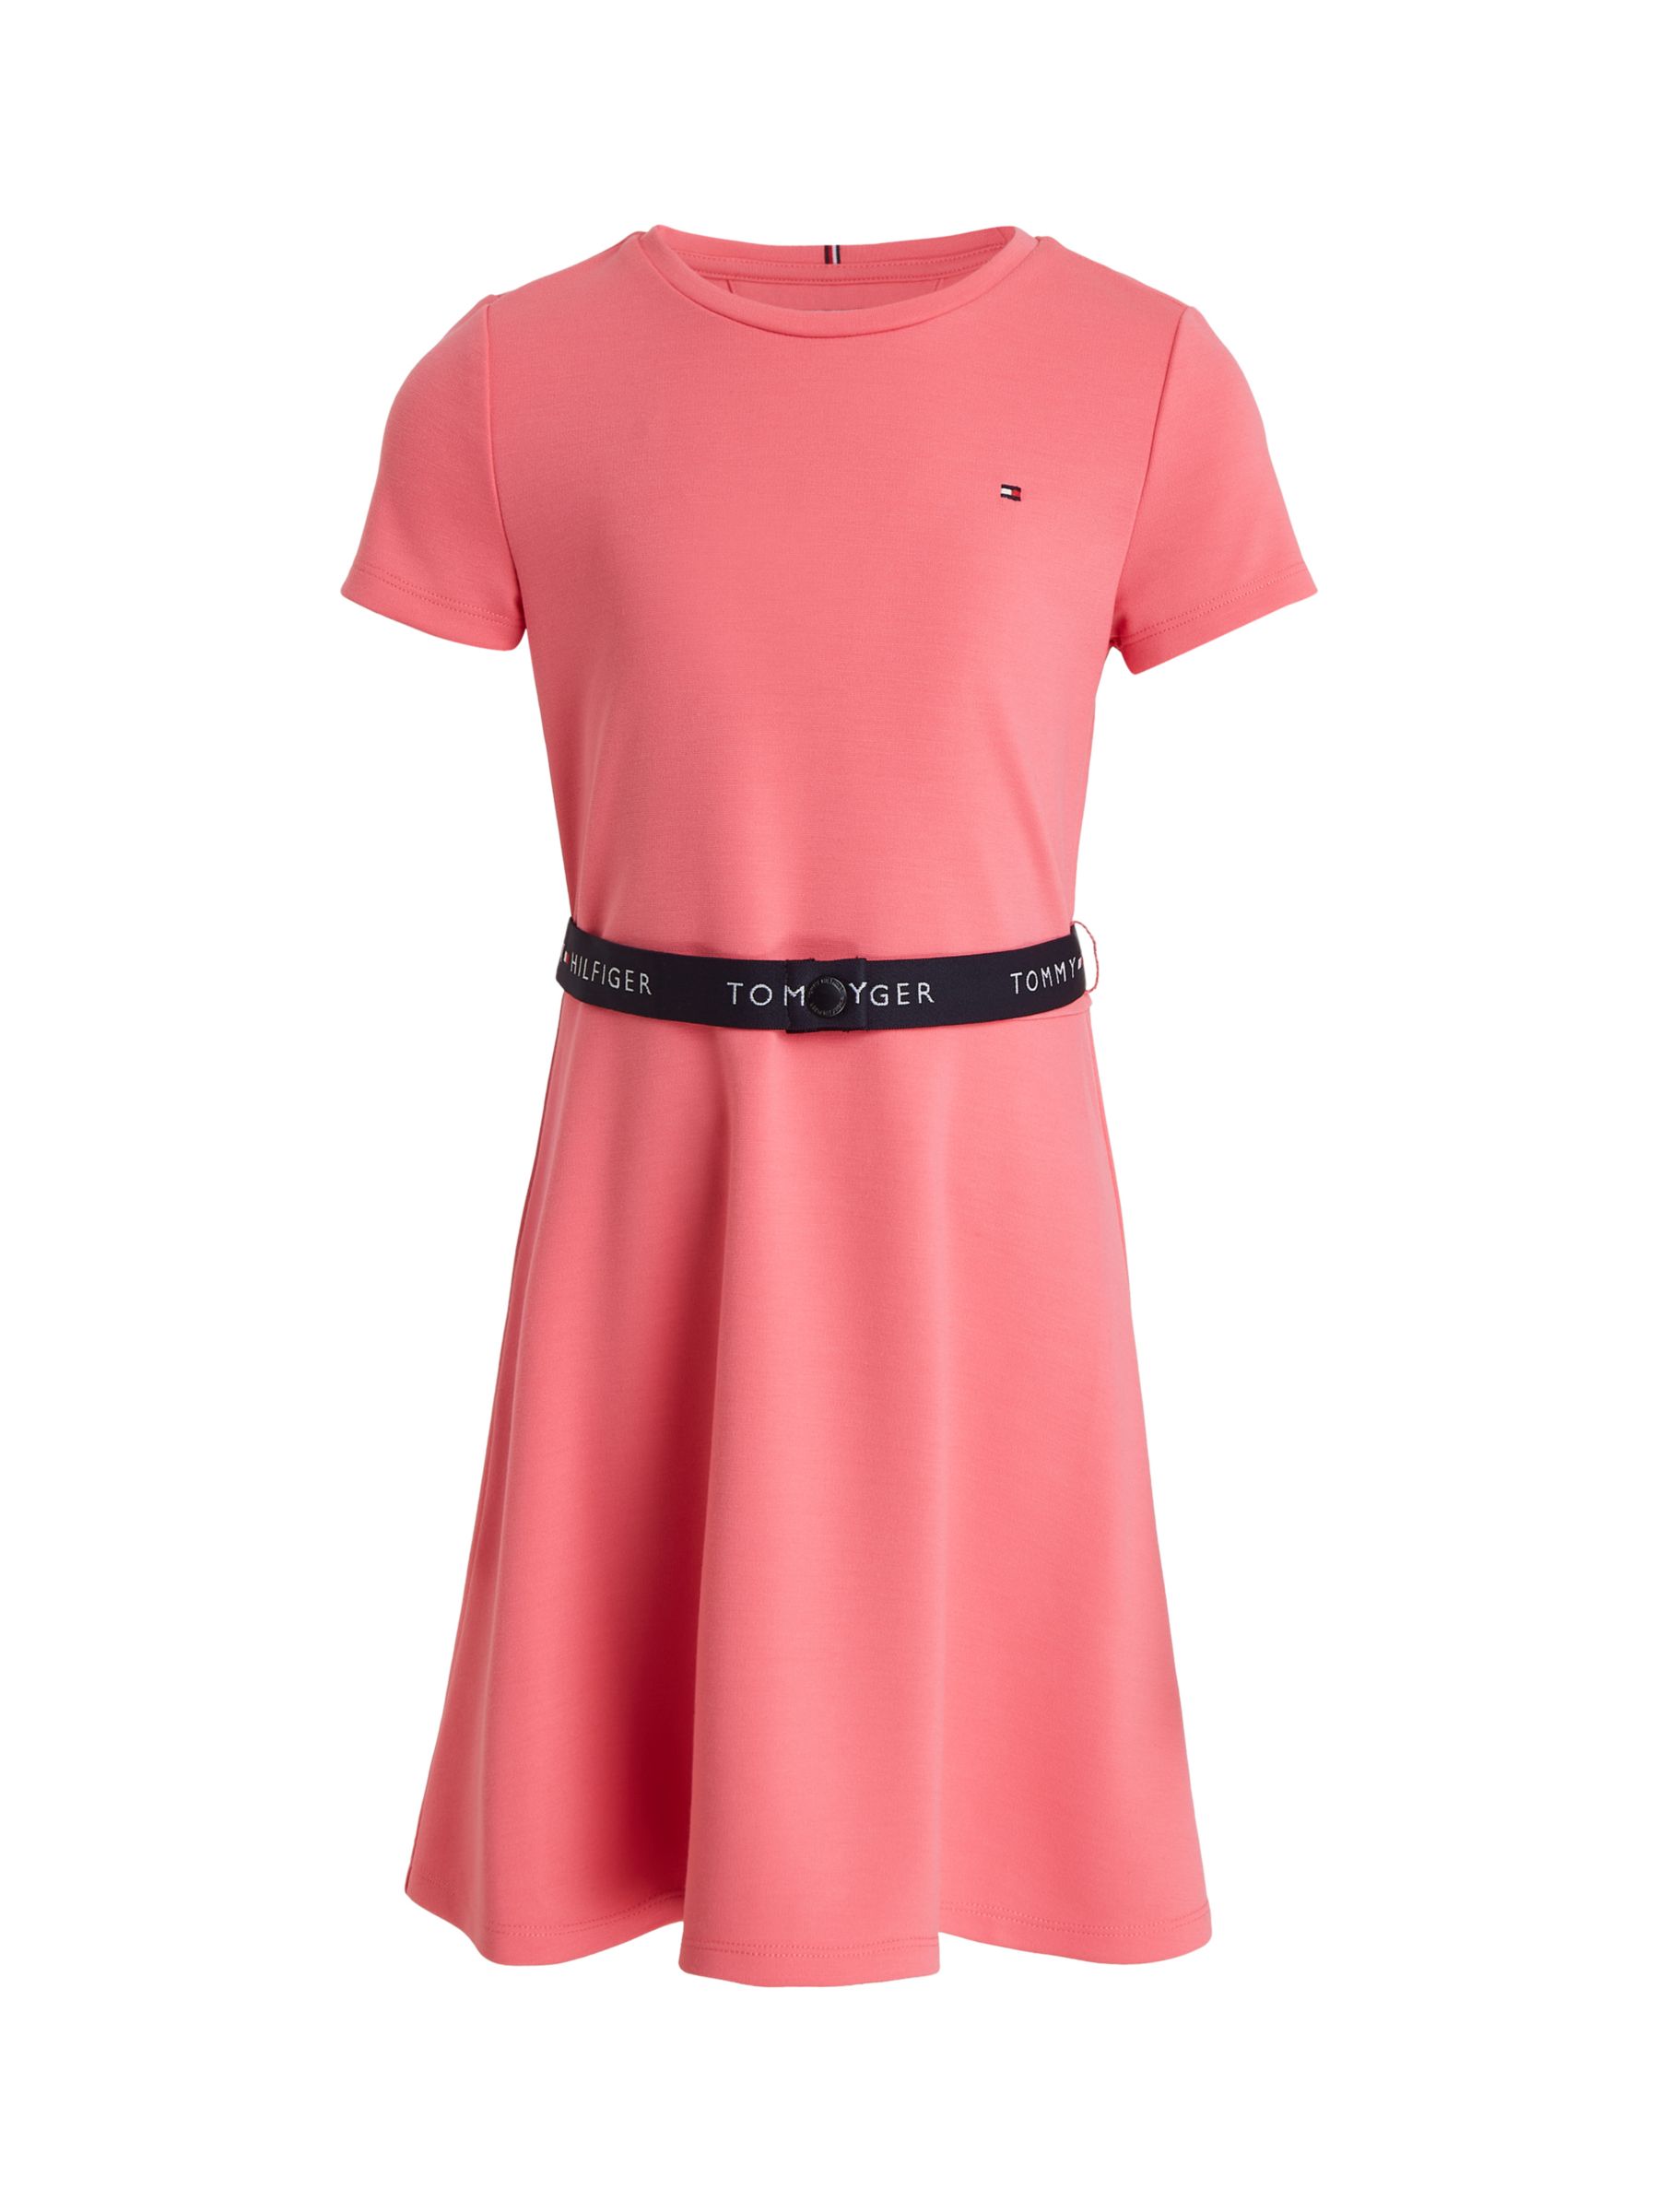 Tommy Hilfiger Kids' Essential Logo Belted Skater Dress, Glamour Pink, 10 years